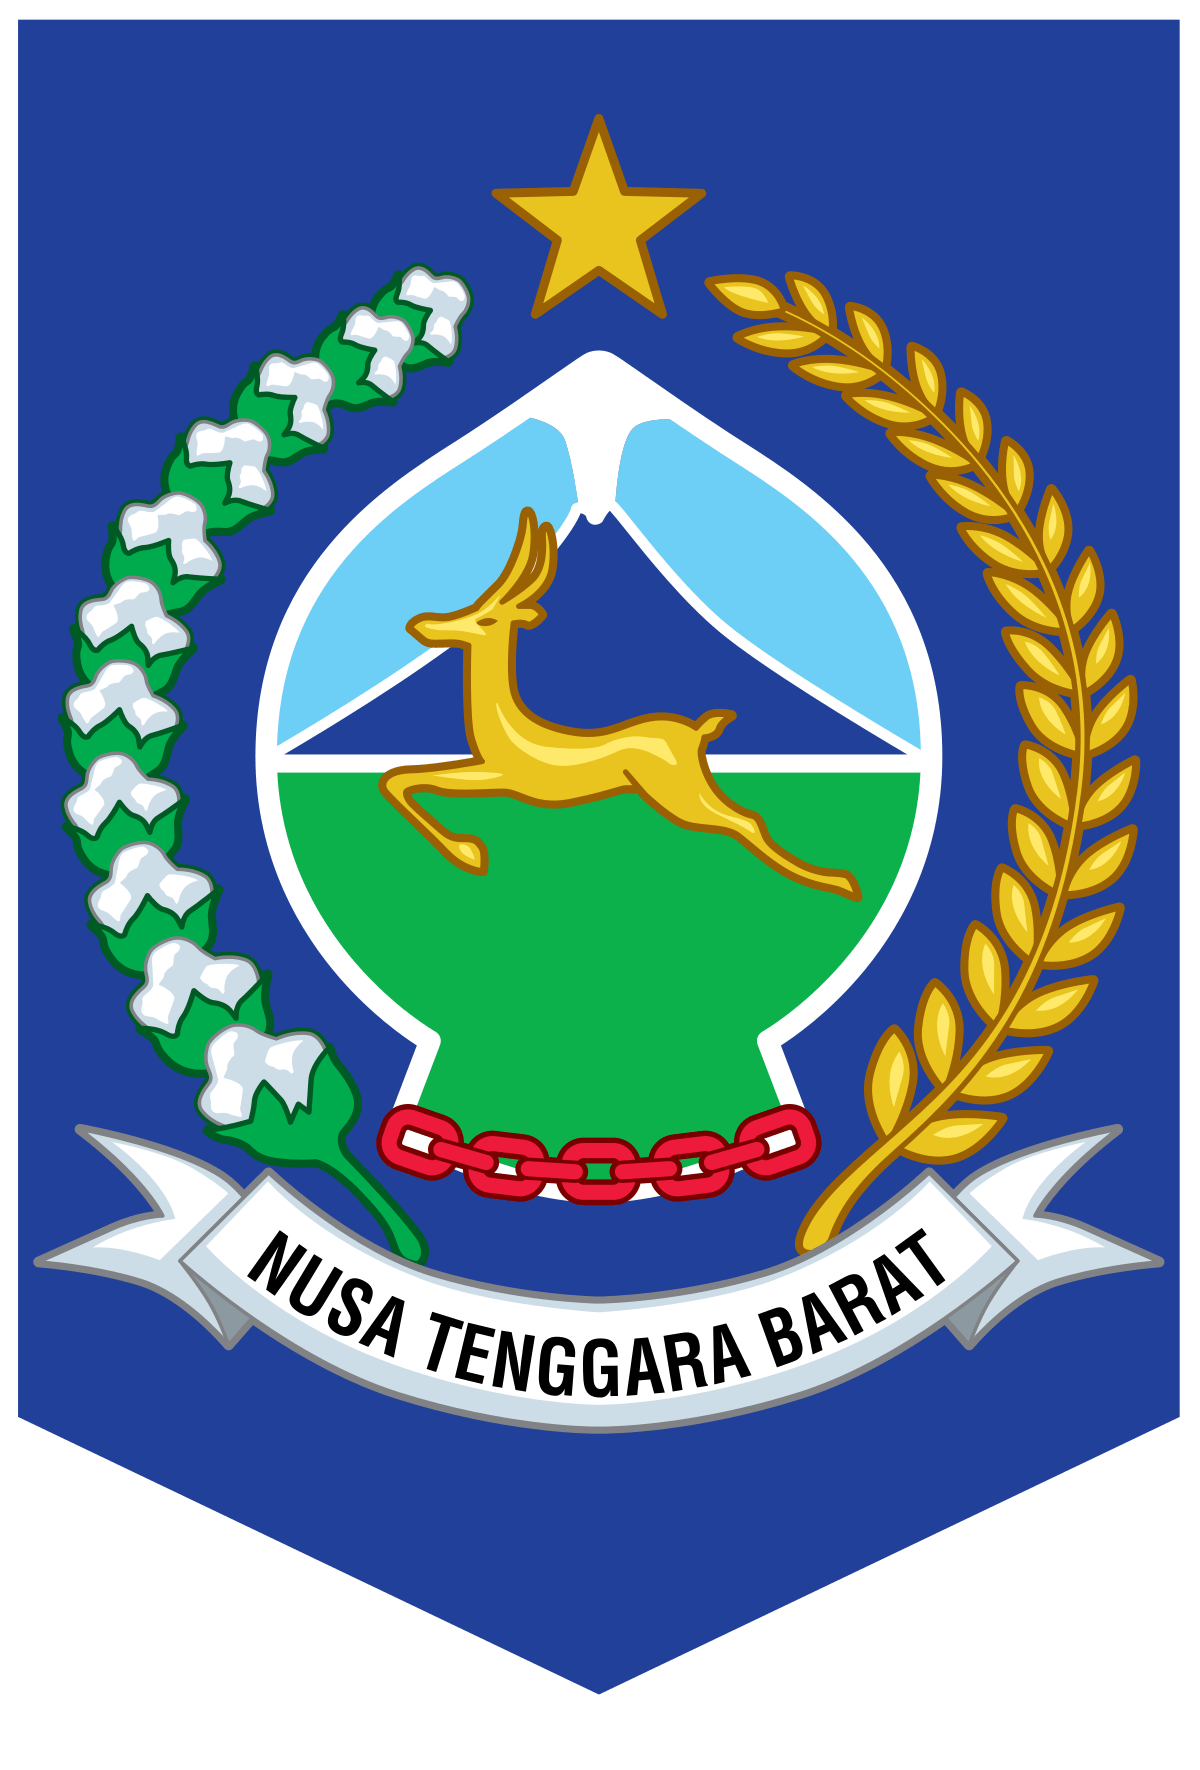 NTB Logo - Lambang Nusa Tenggara Barat bahasa Indonesia